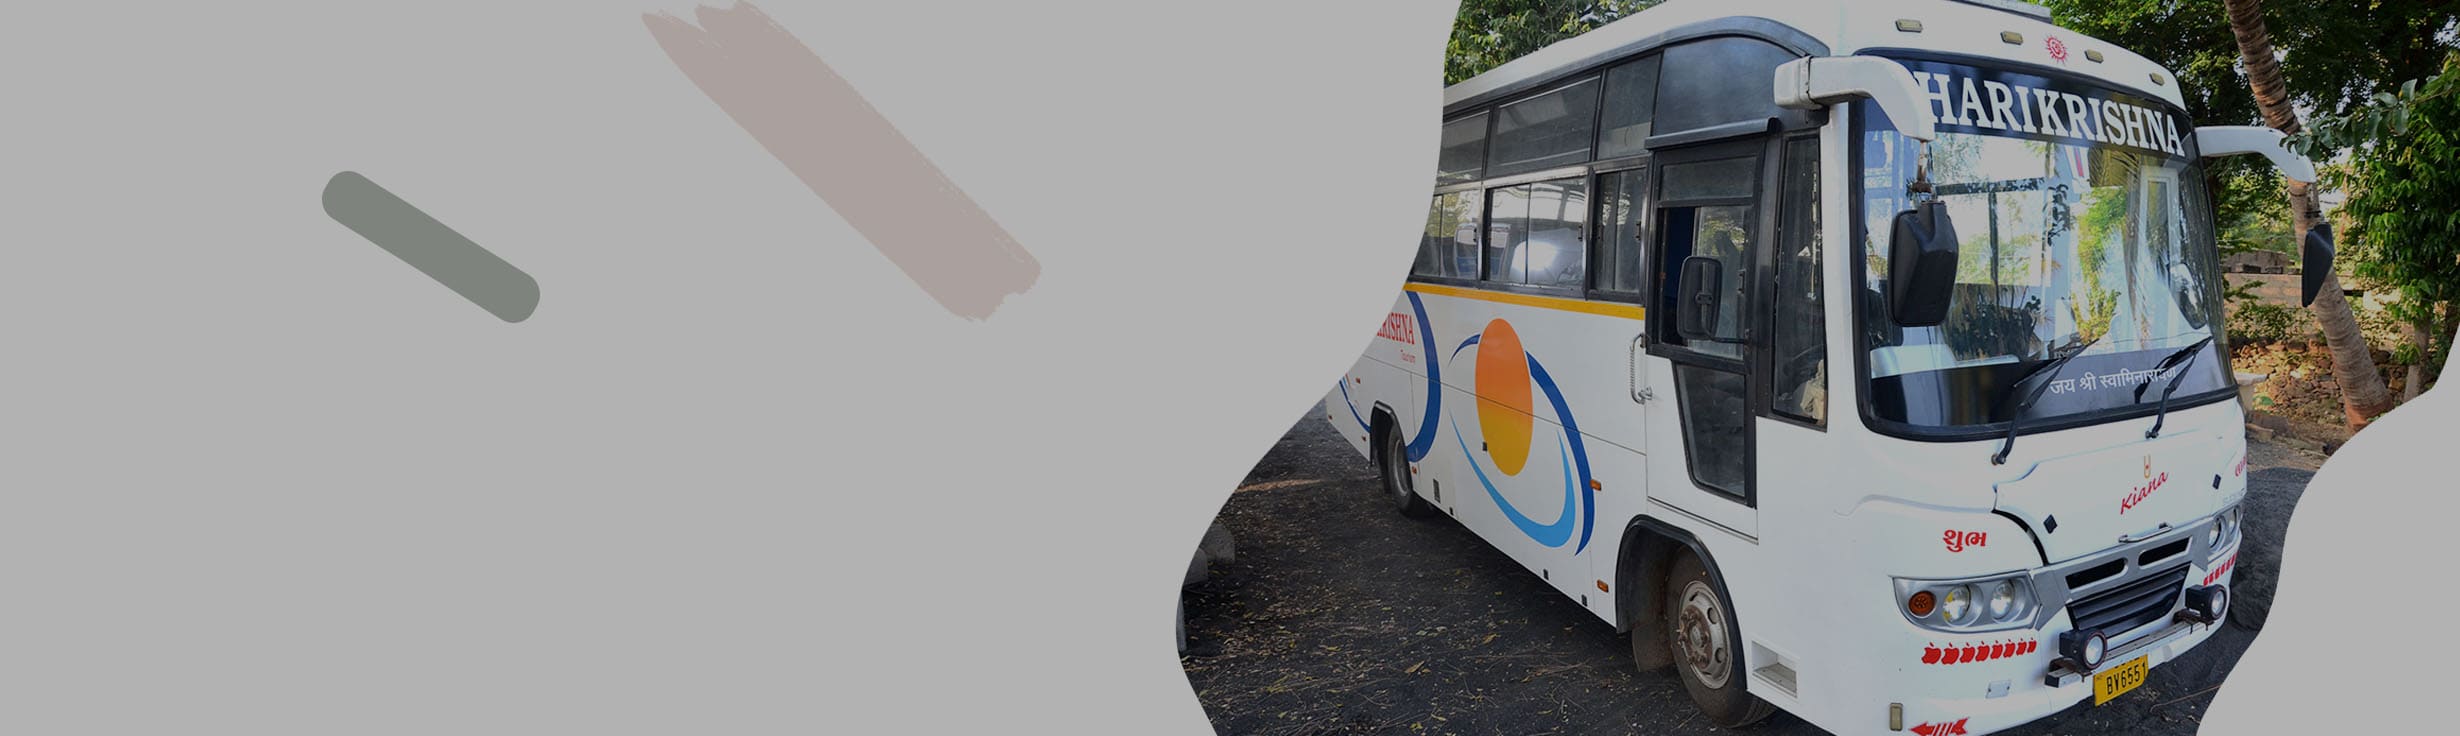 Seating Minibus for India Tour in Bhuj